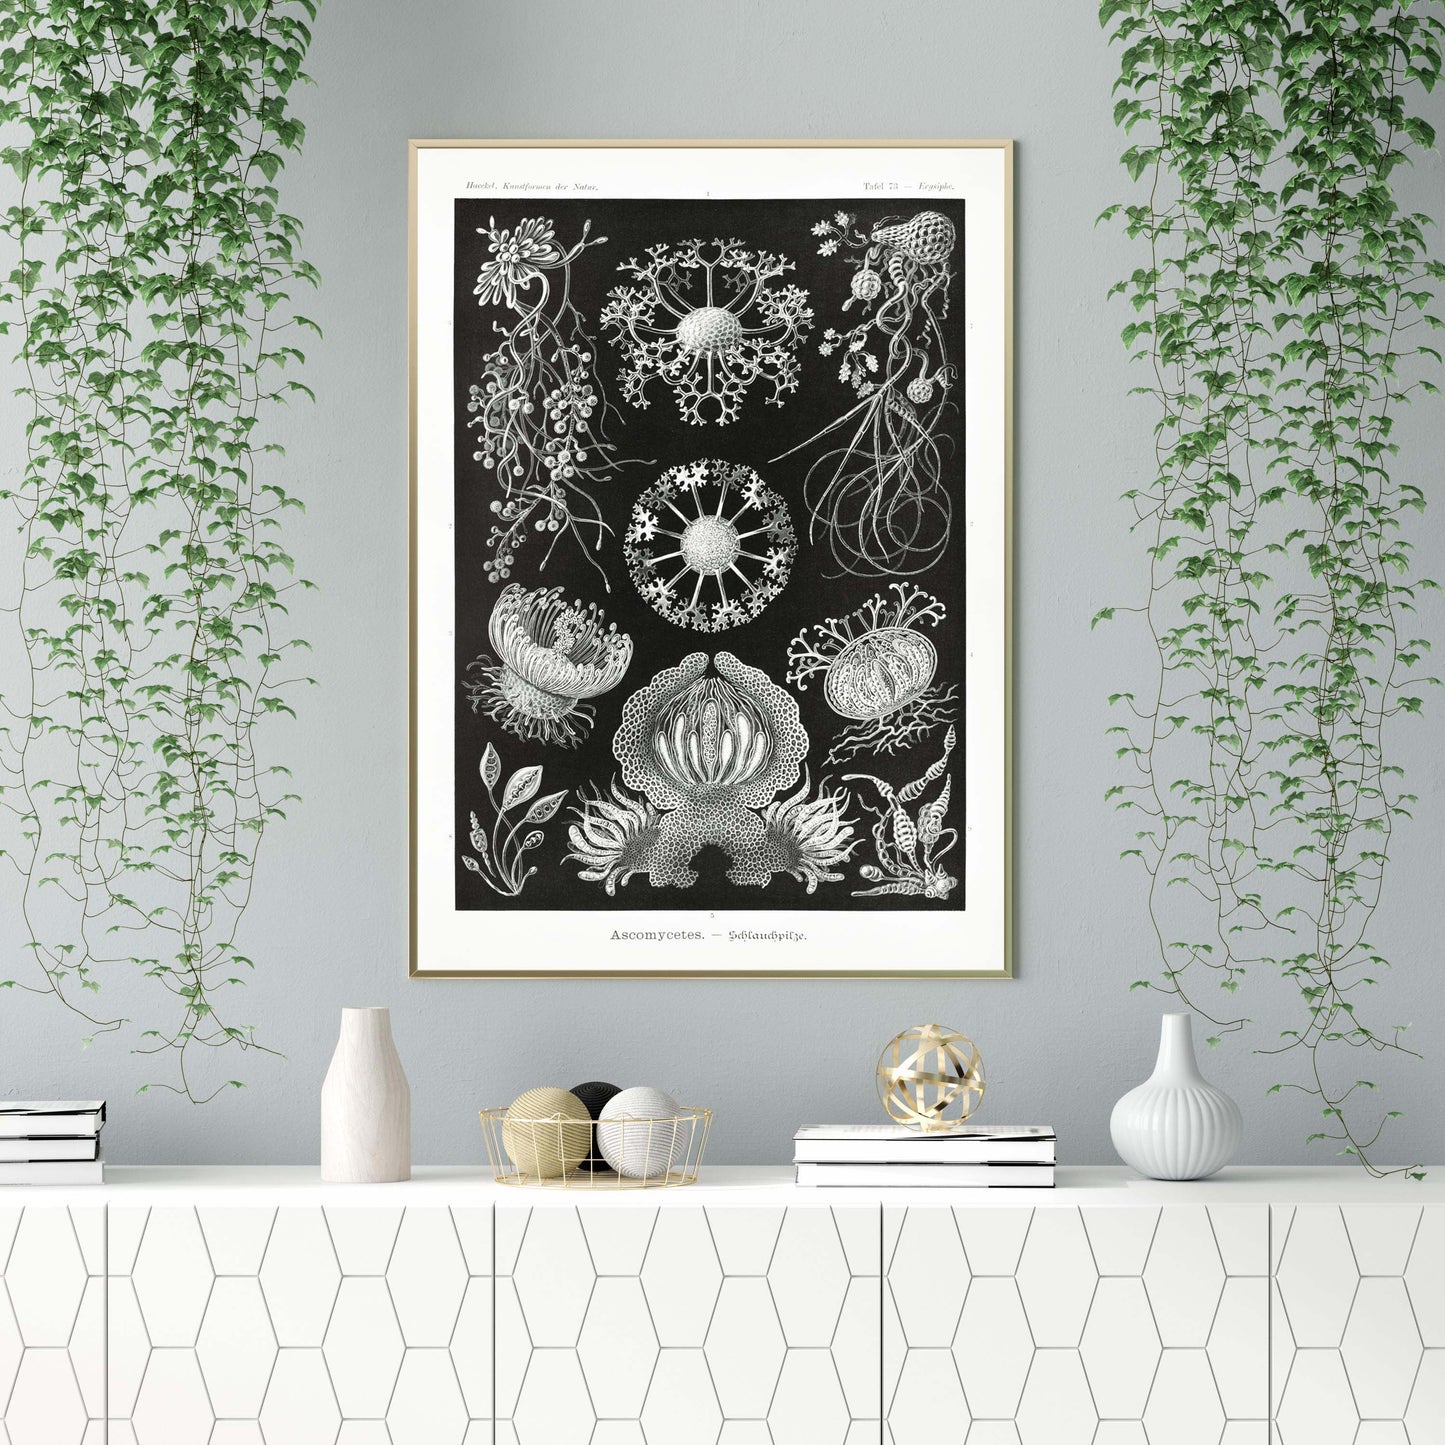 Ernst Haeckel Wall Art - Ascomycetes by Ernst Haeckel Poster